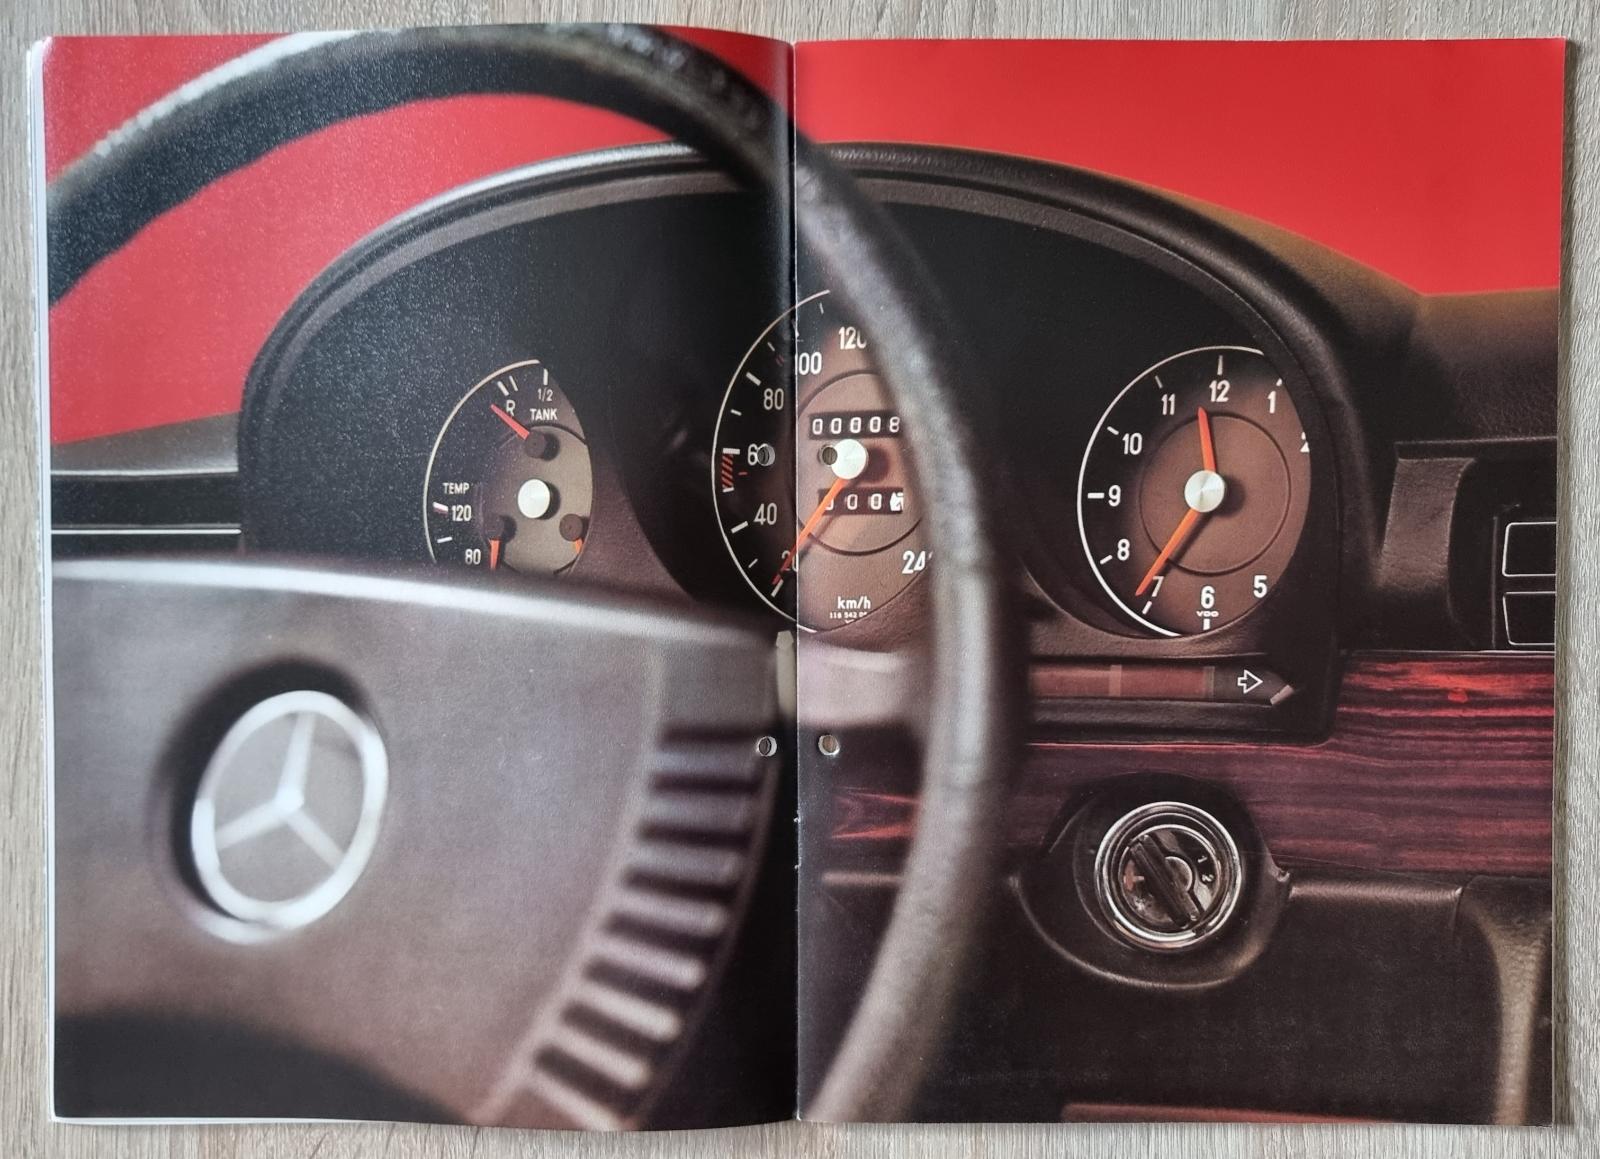 Mercedes-Benz 350 SE   1972 - Motoristická literatura